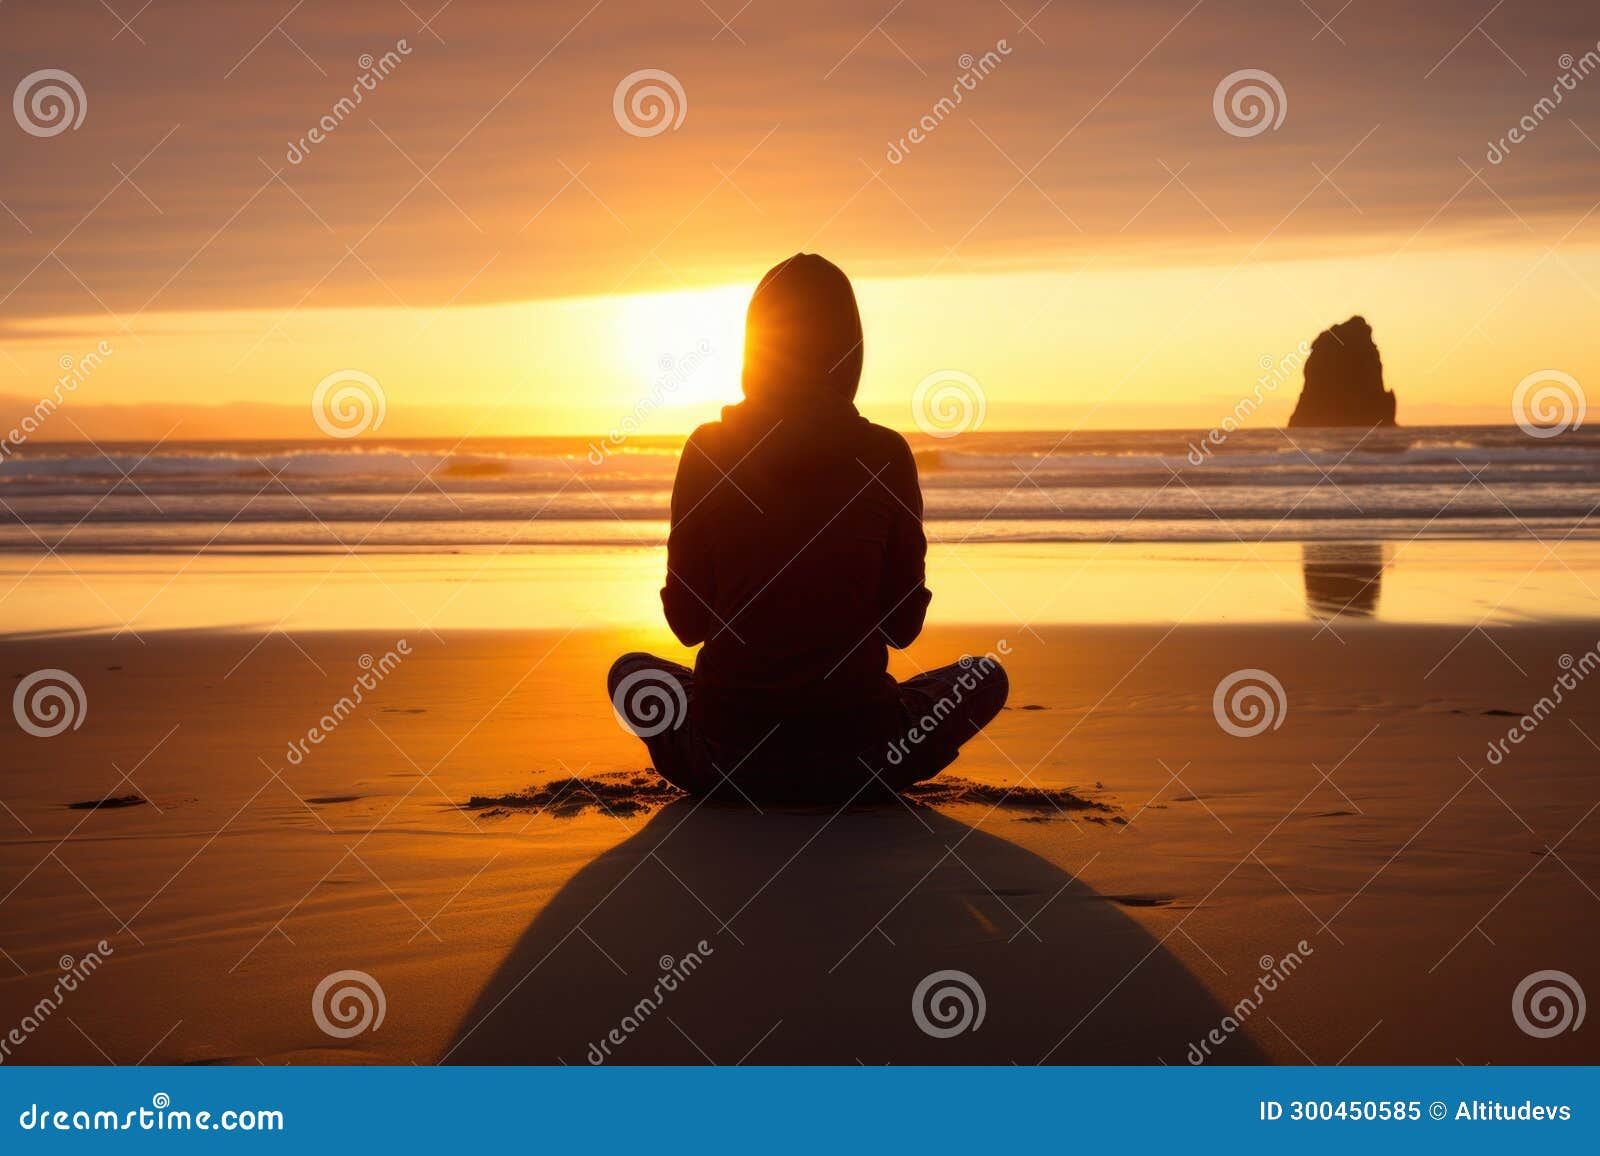 Person Praying on a Sandy Beach at Sunrise Stock Illustration ...